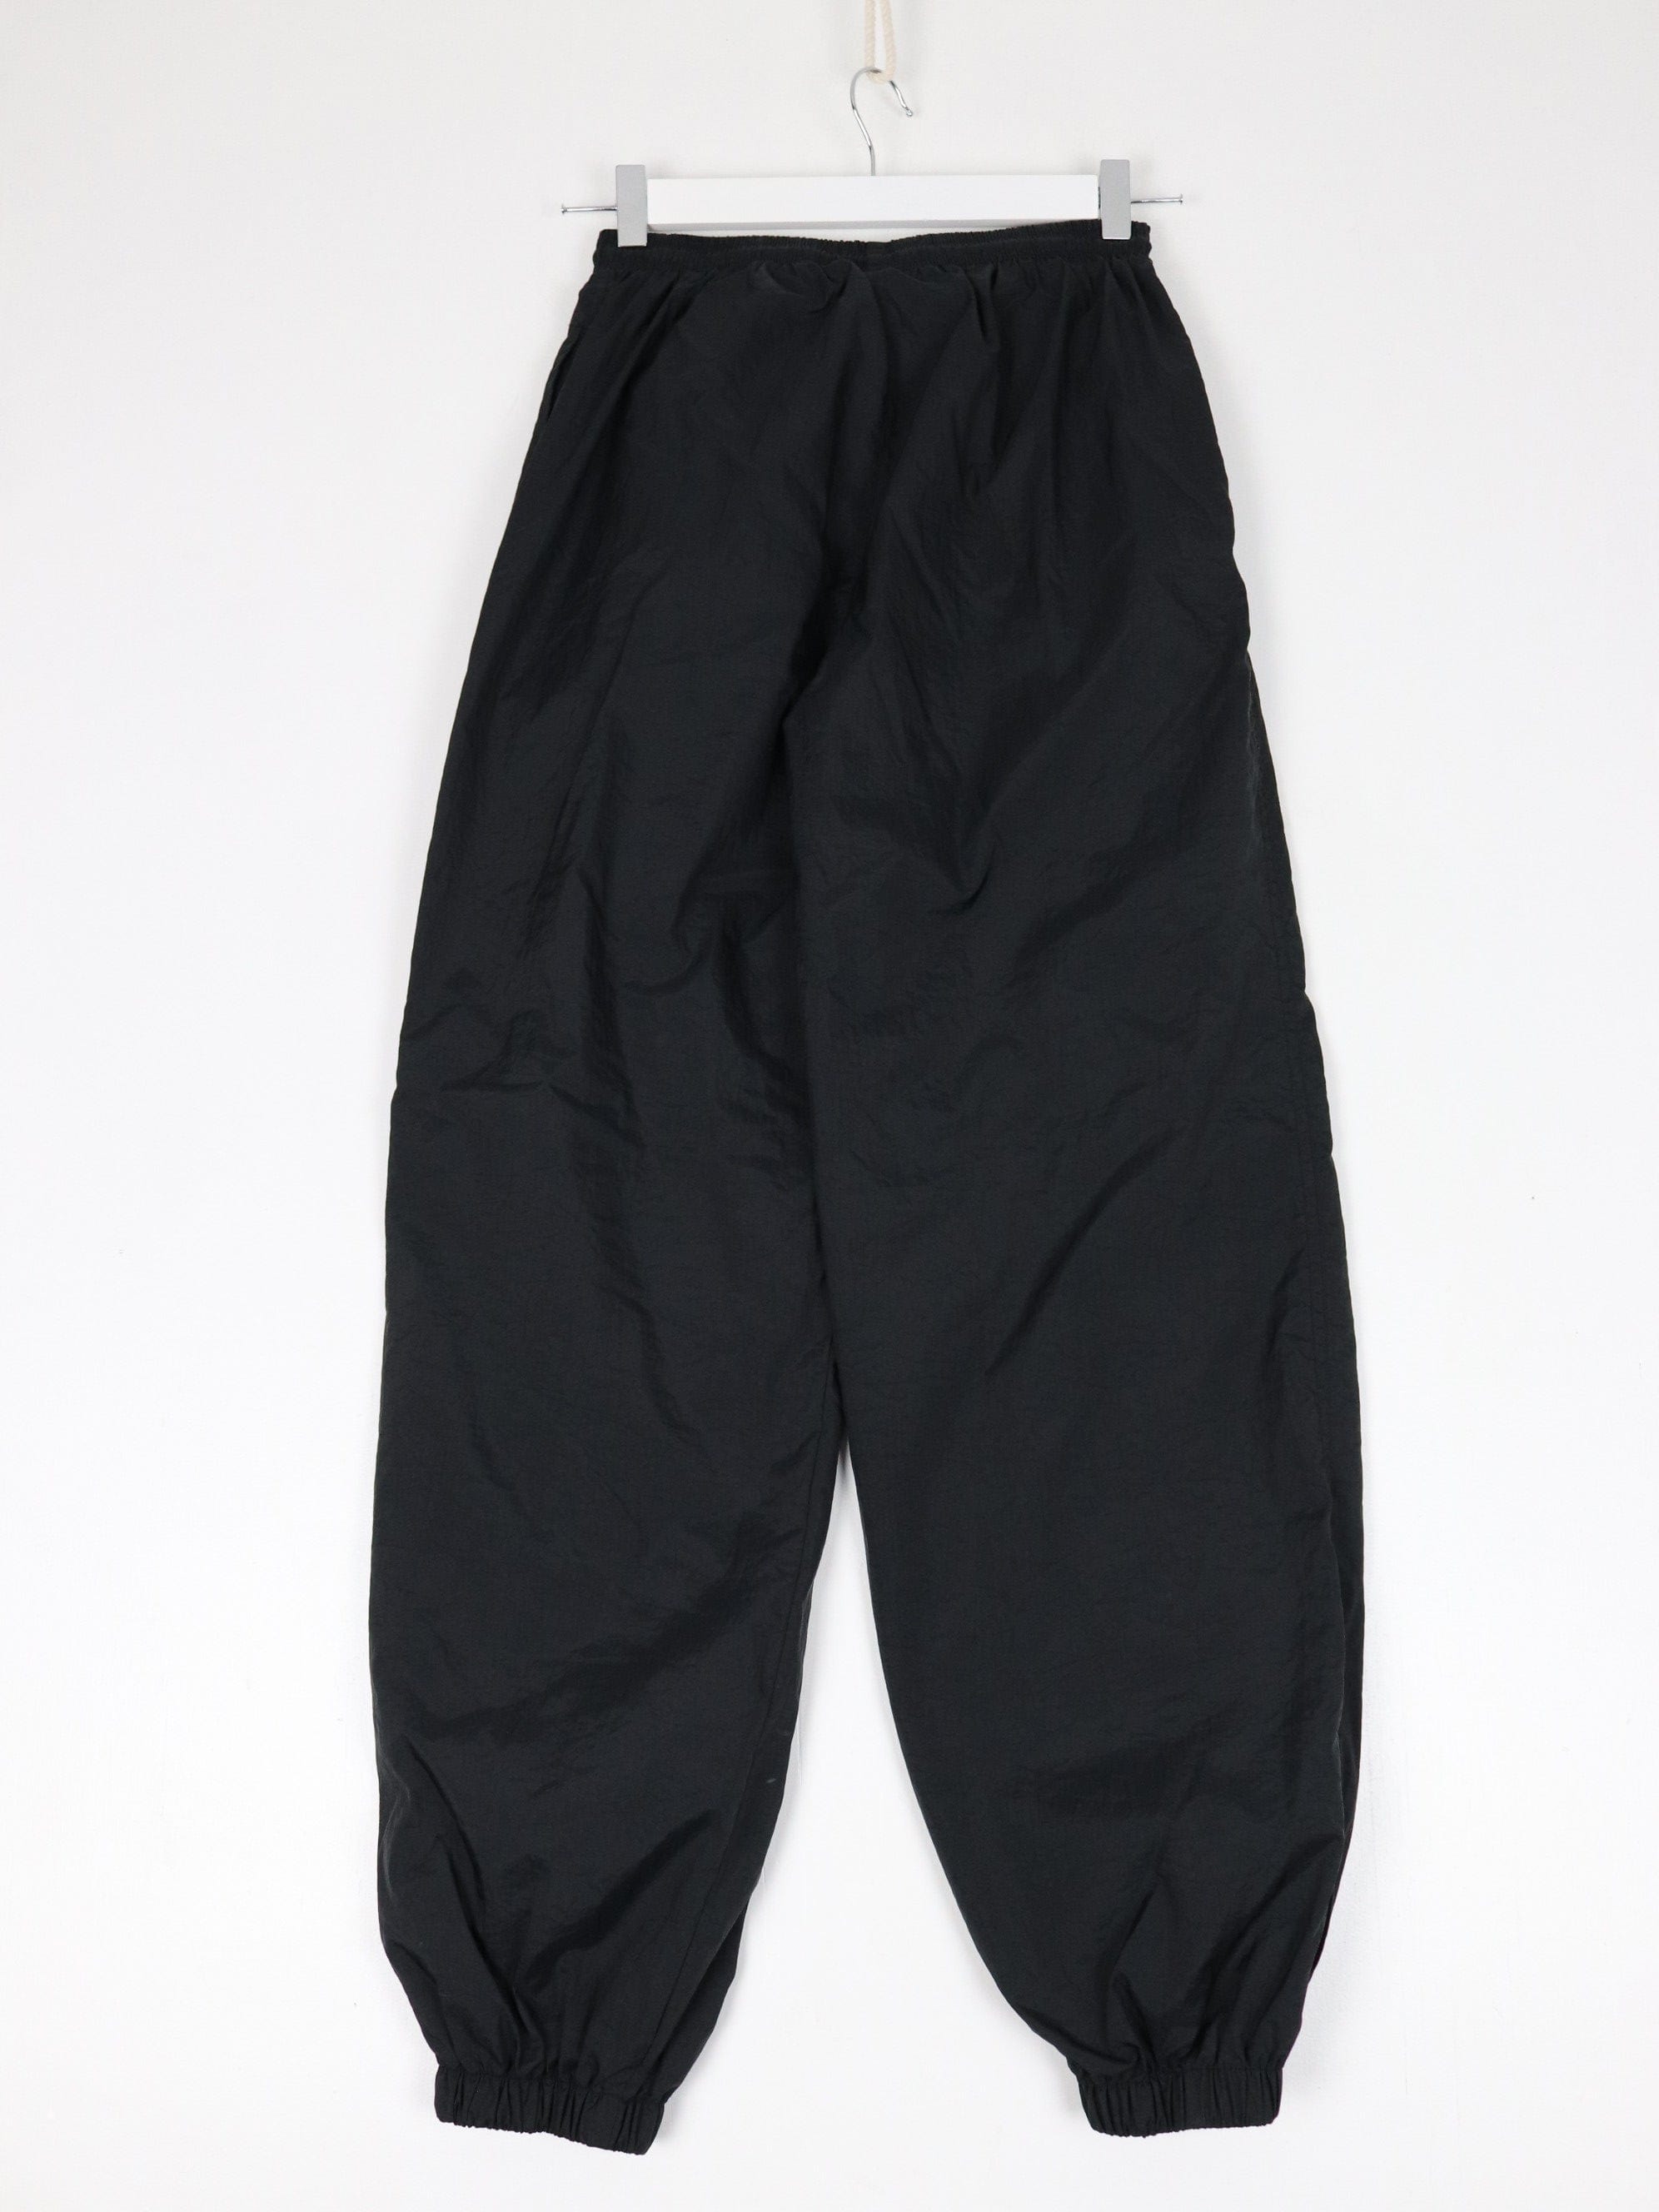 Adidas vintage 90s grey track pants